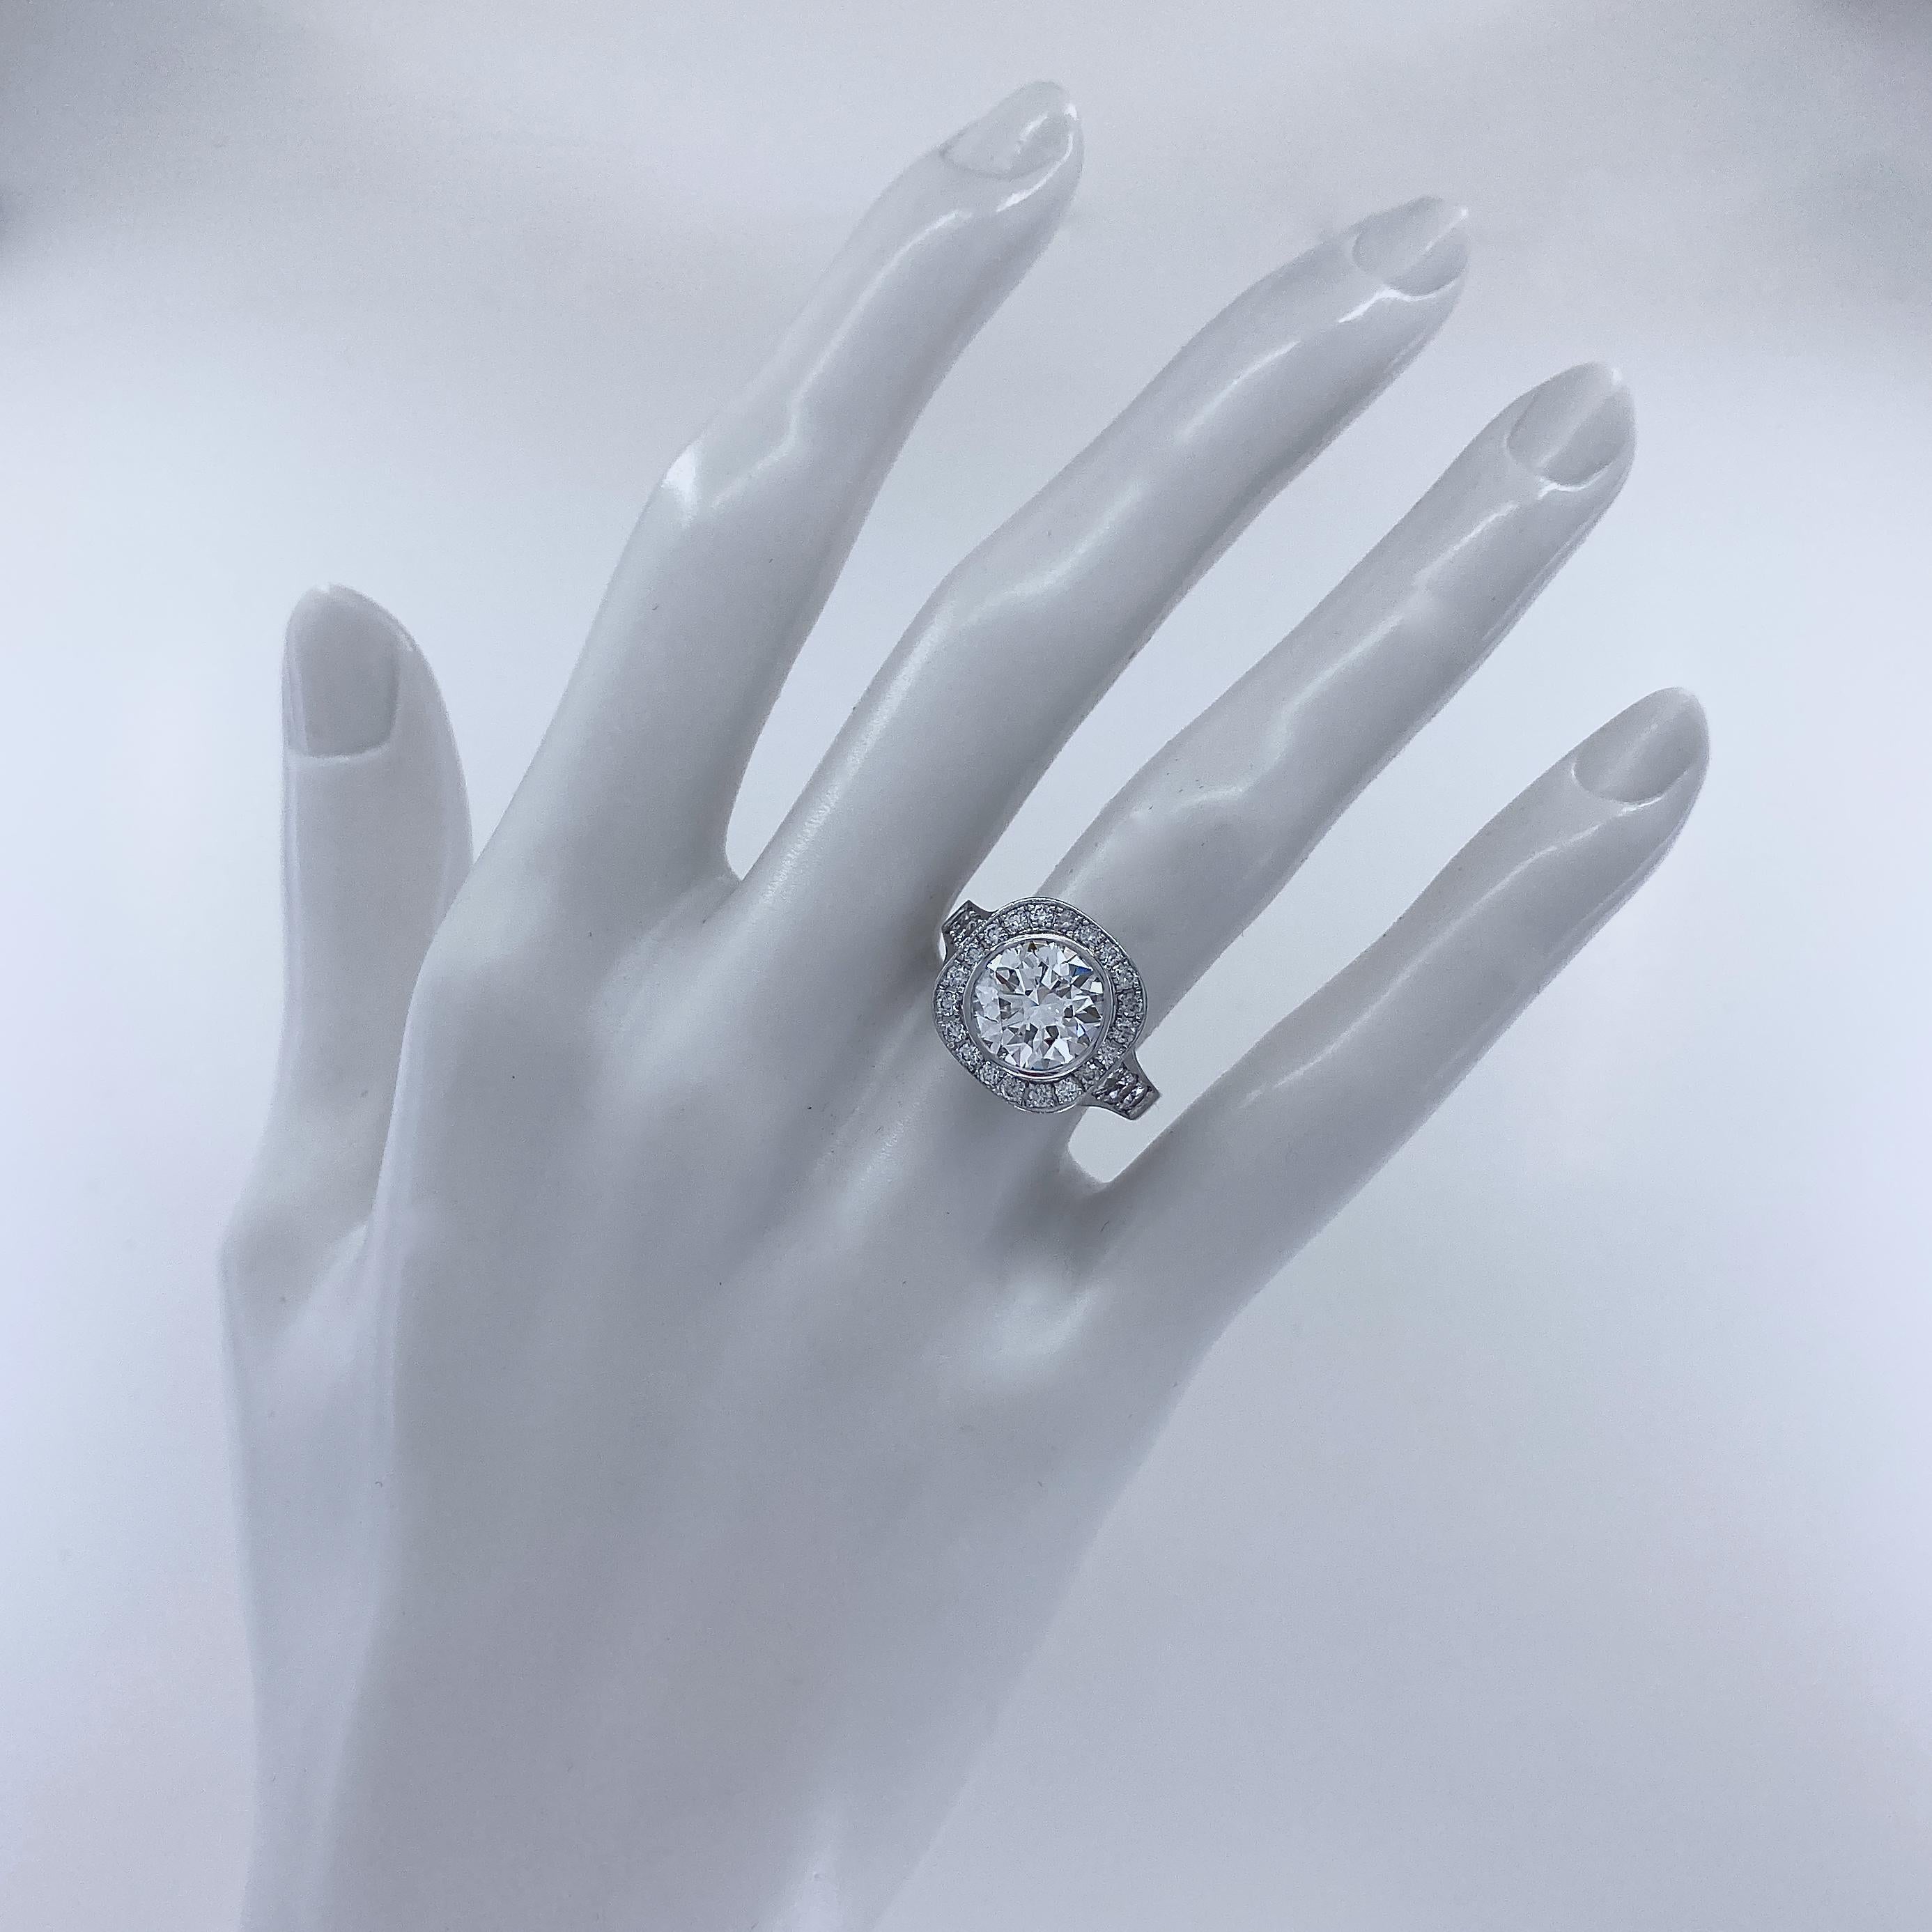 3.12 carat diamond ring